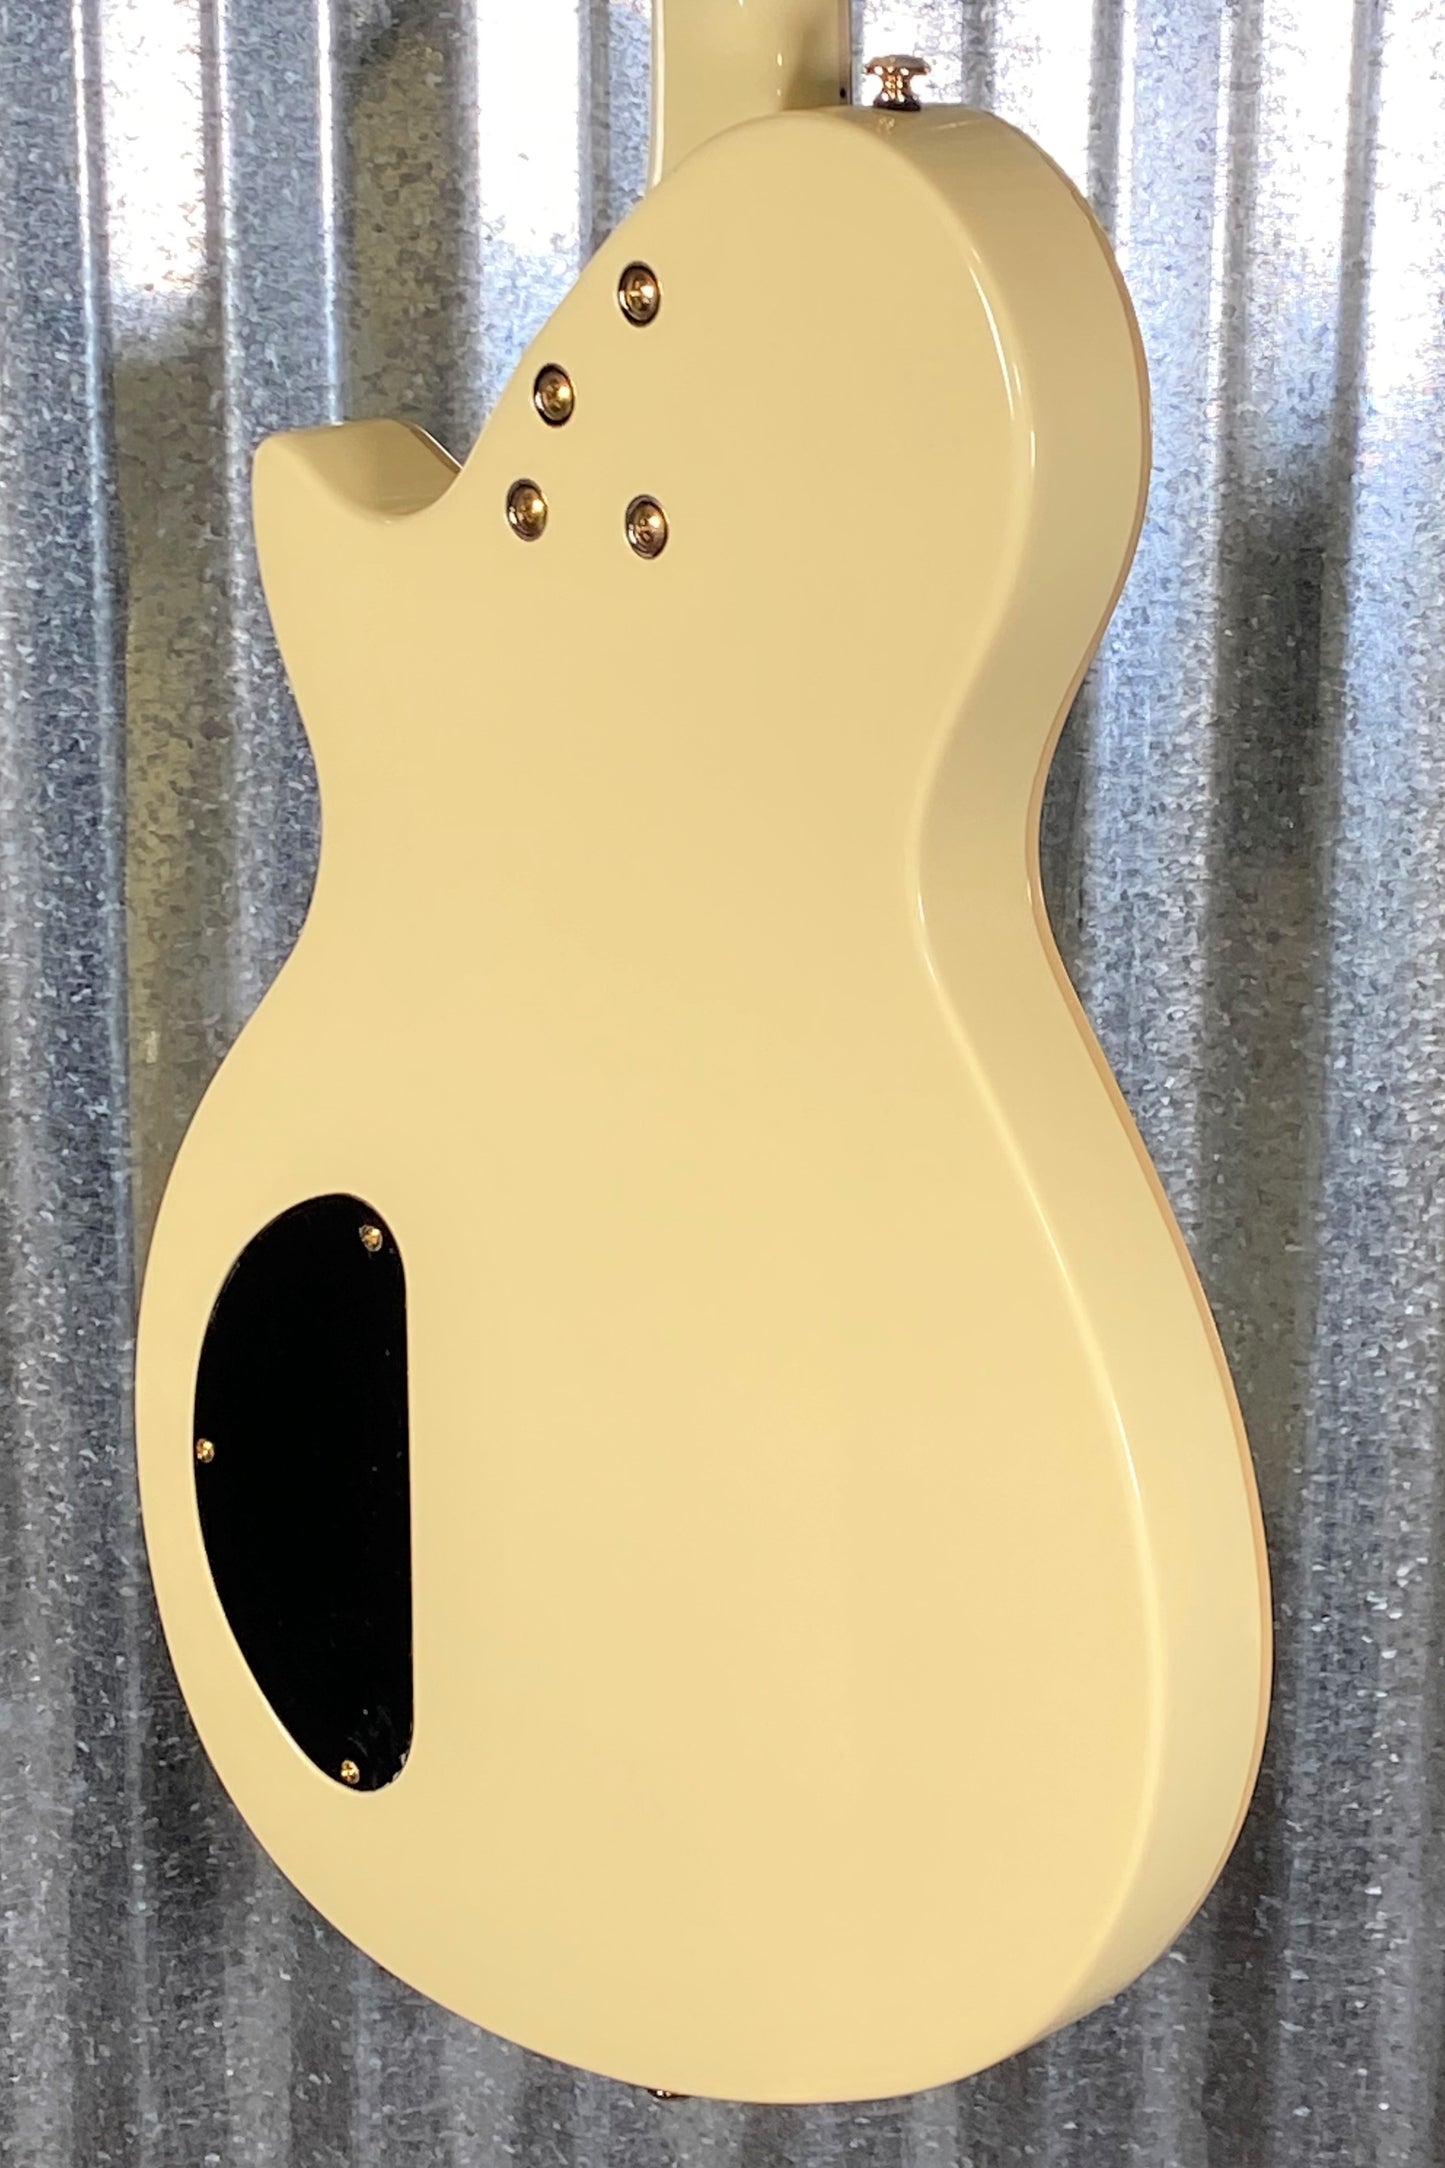 ESP LTD Xtone PS-1 Vintage White Semi Hollow Guitar XPS1VW #1258 Used